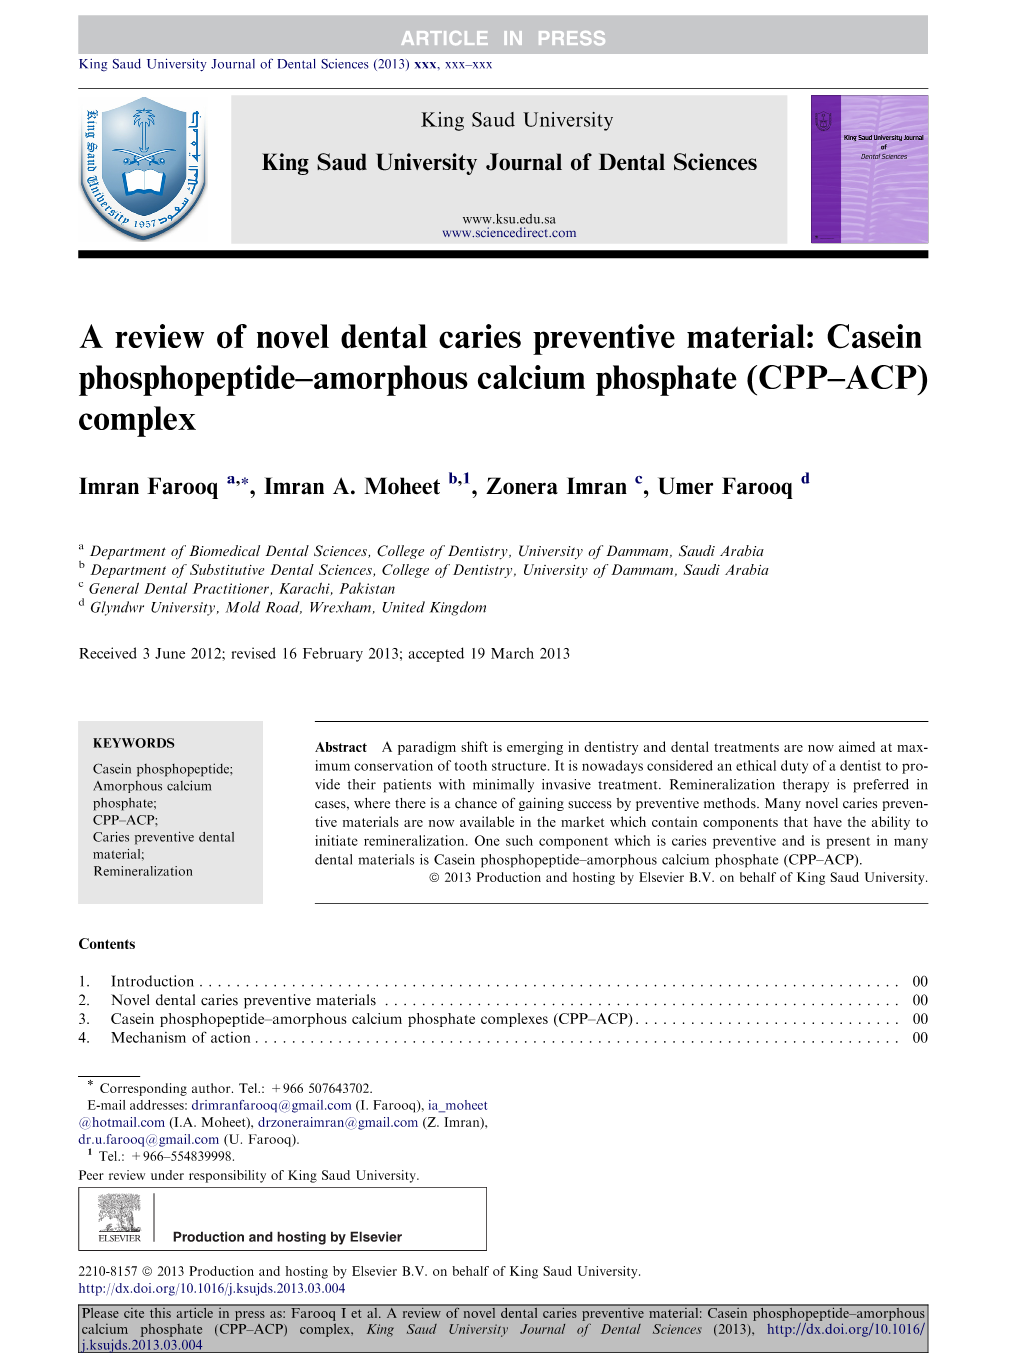 “Amorphous Calcium Phosphate (Cppâ€“ACP) C